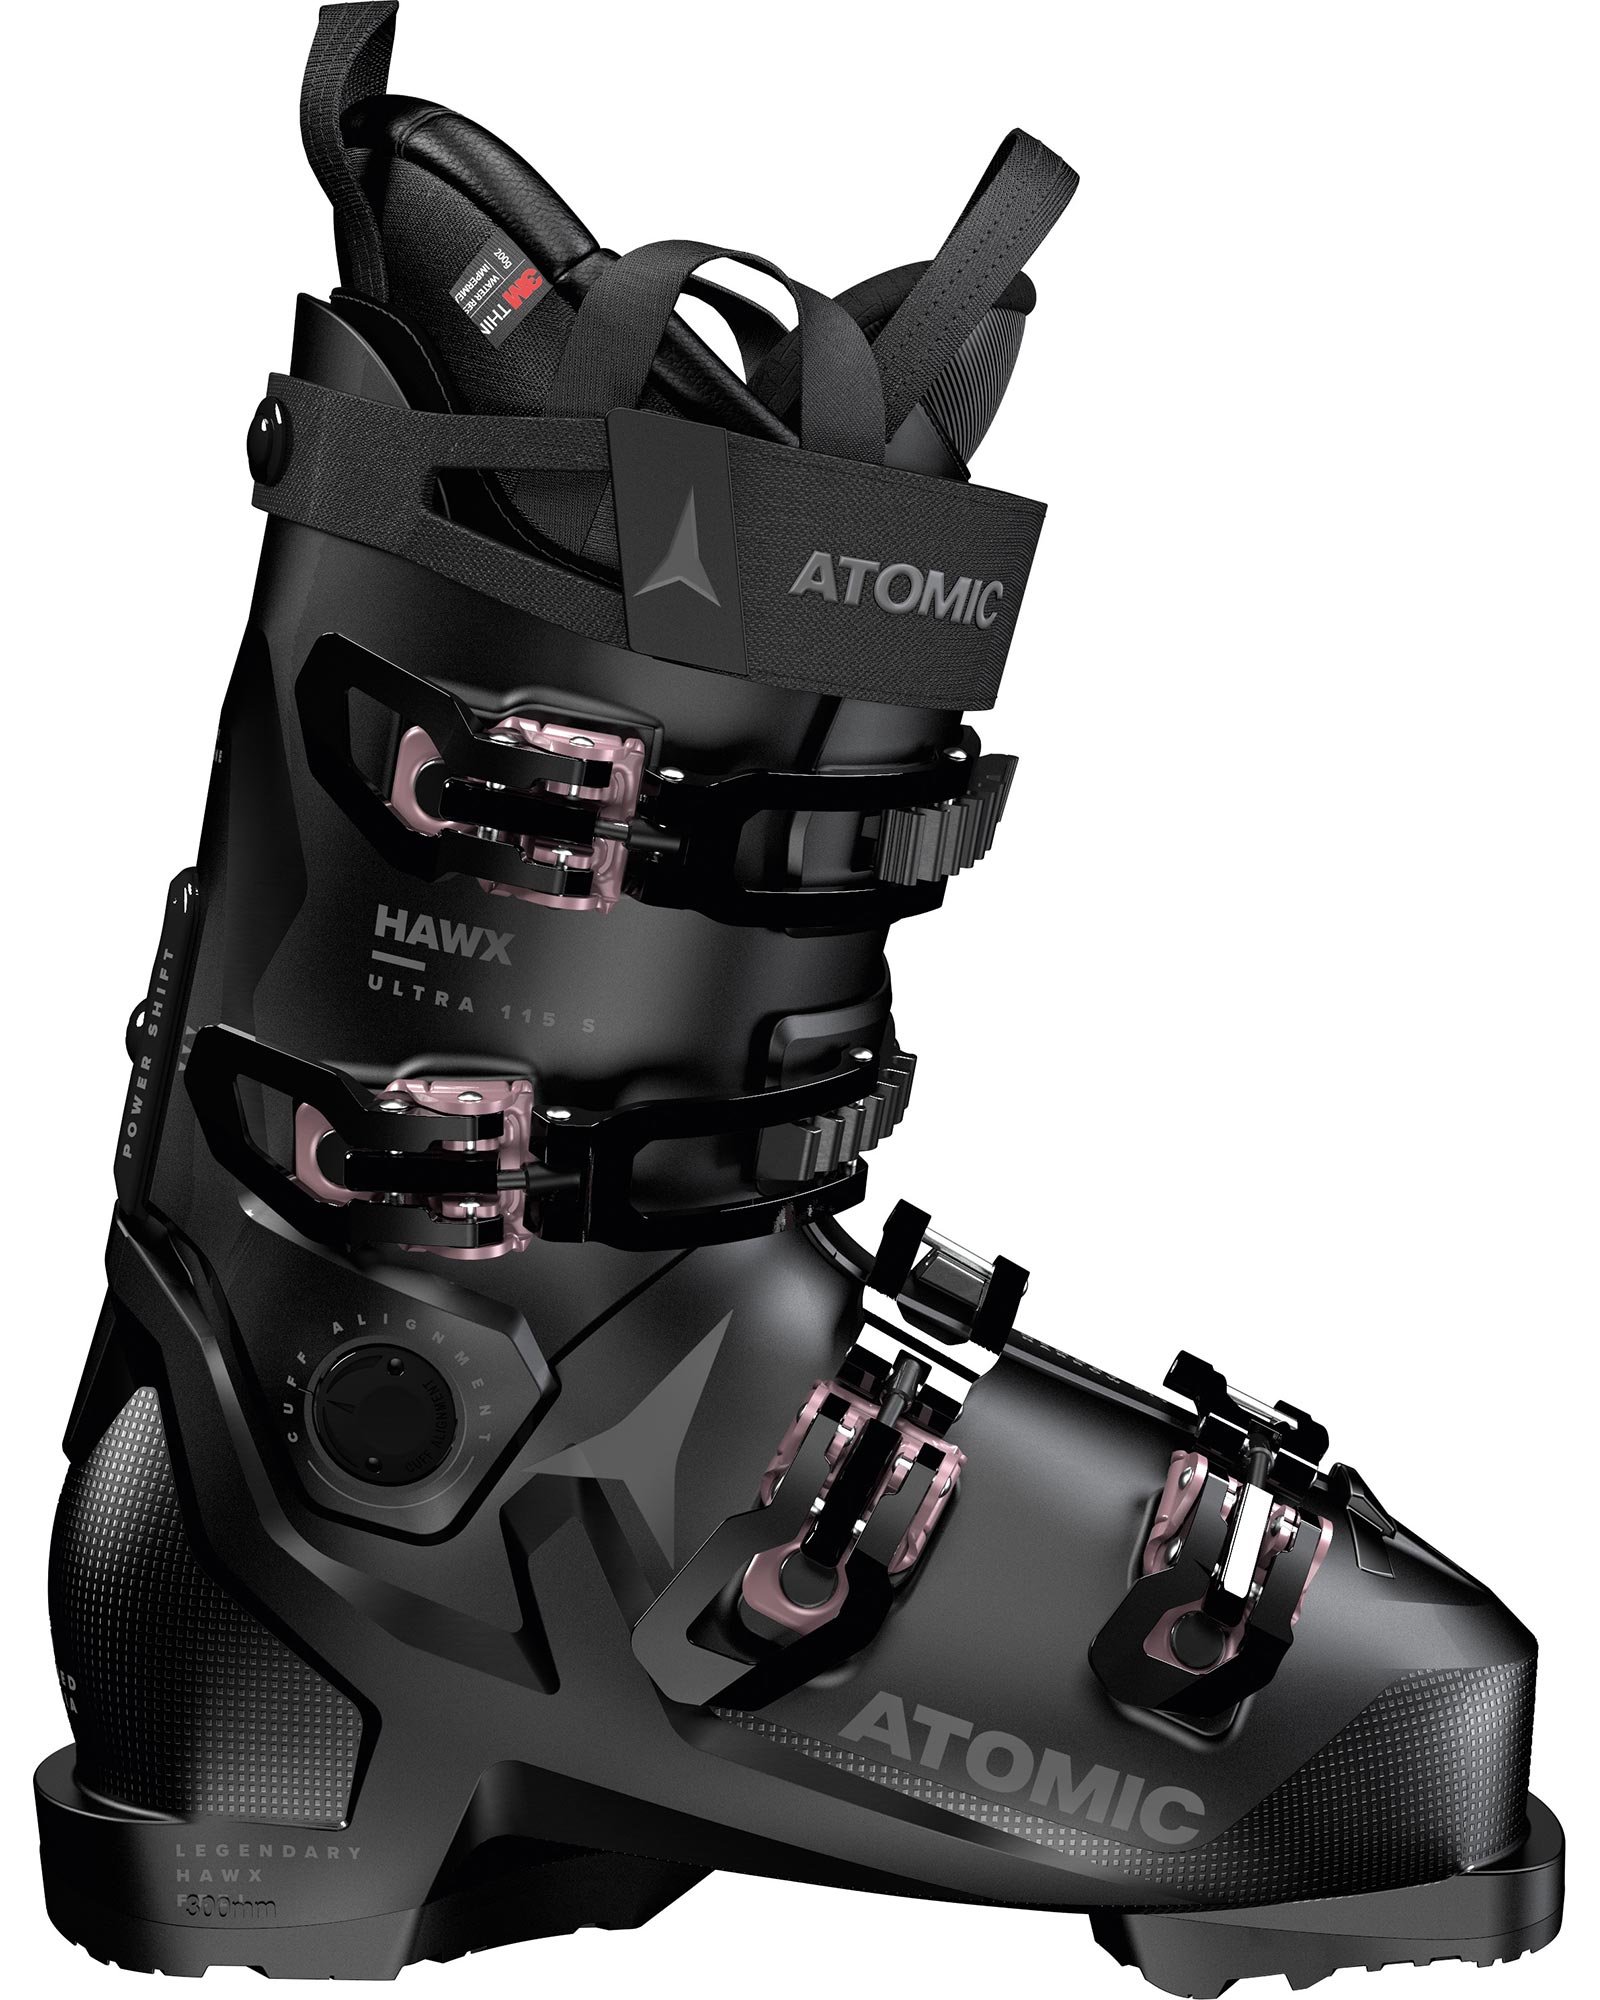 Atomic Hawx Ultra 115 S GW Women’s Ski Boots 2023 - Black/Rose Gold MP 26.0